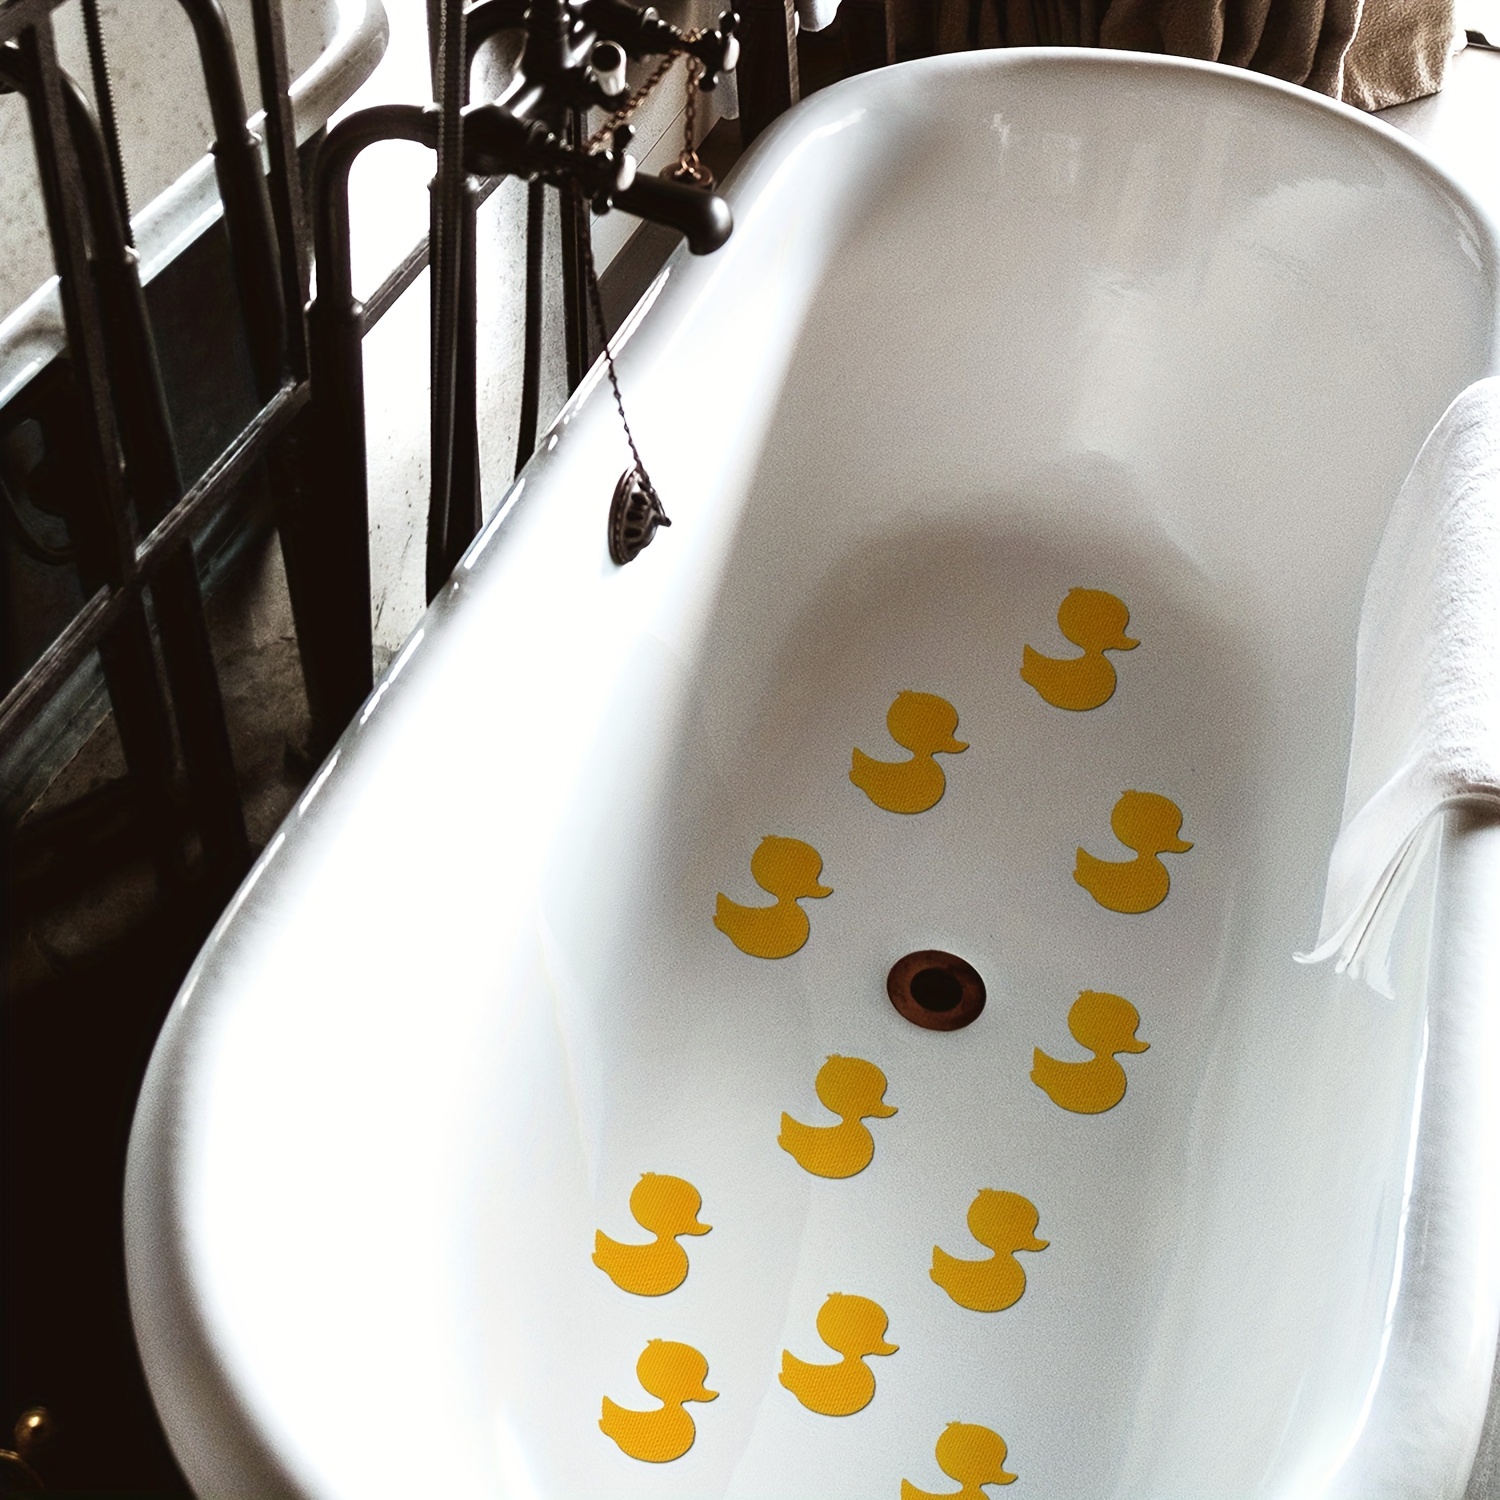 Non-slip for Duckling Bathtubs. Non-slip Stickers of Ducks to